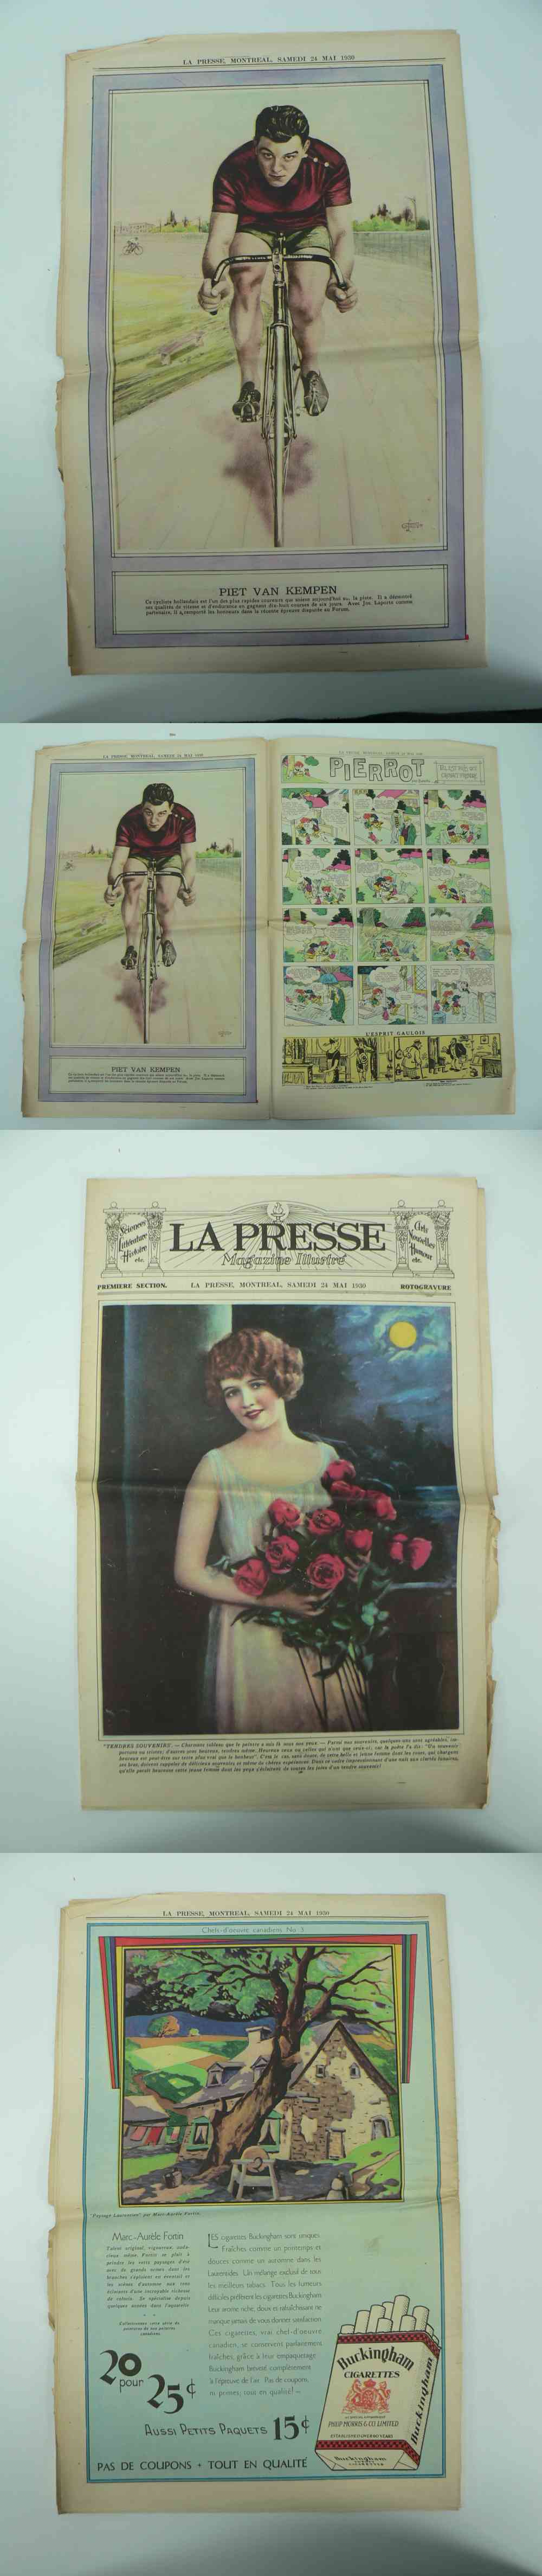 1930 LAPRESSE FULL NEWSPAPER INSIDE PHOTO PIET VAN KEMPEN photo